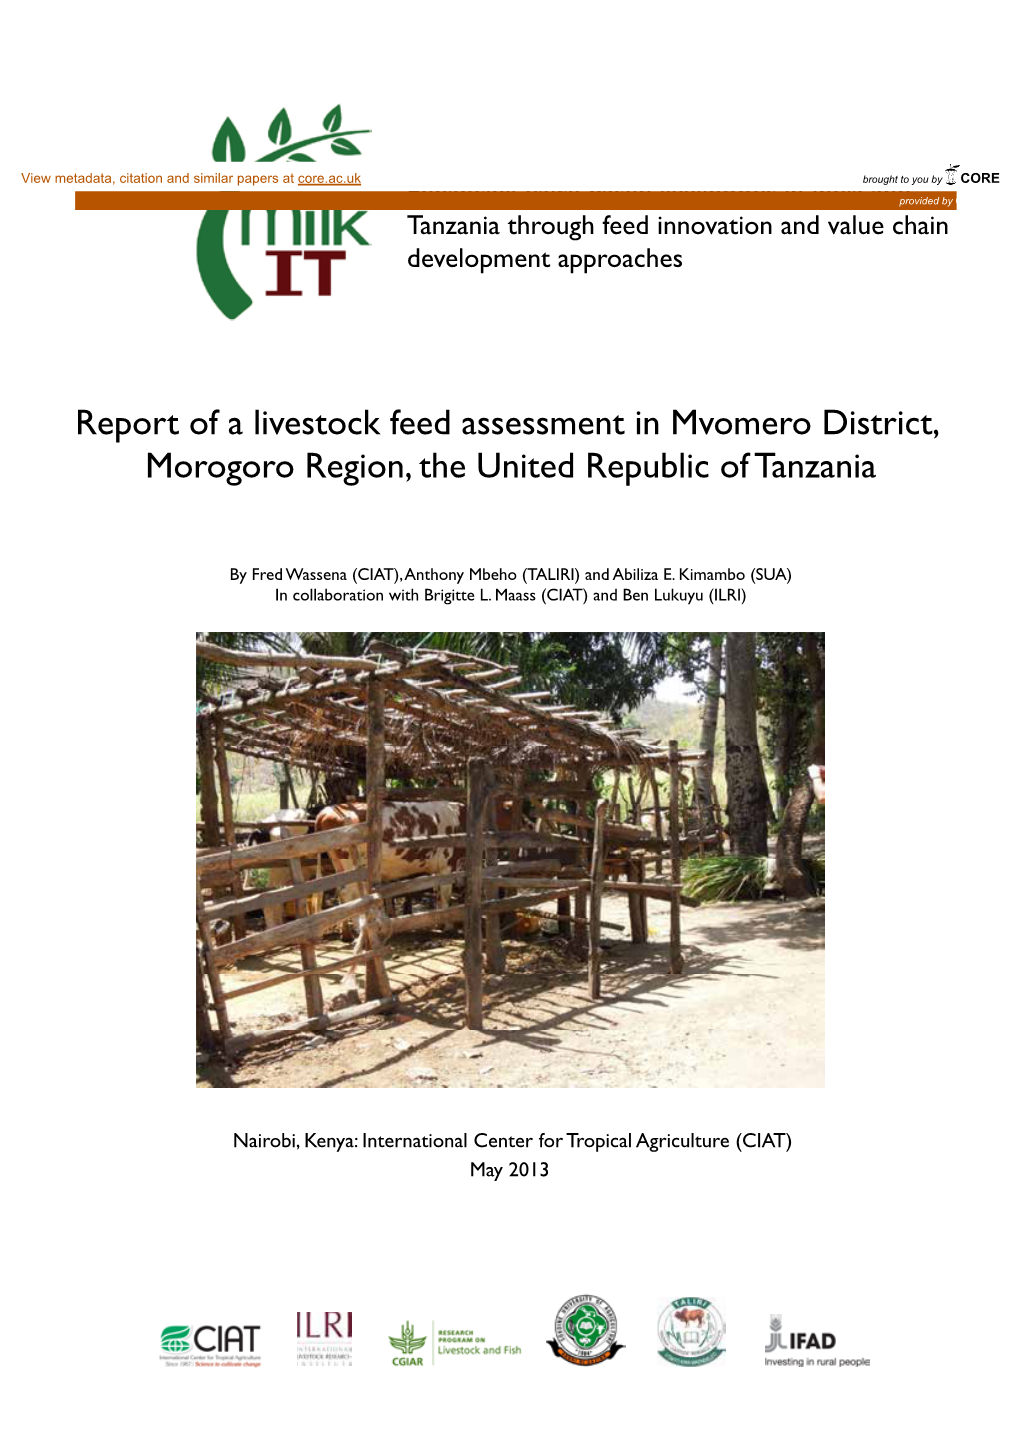 Report of a Livestock Feed Assessment in Mvomero District, Morogoro Region, the United Republic of Tanzania